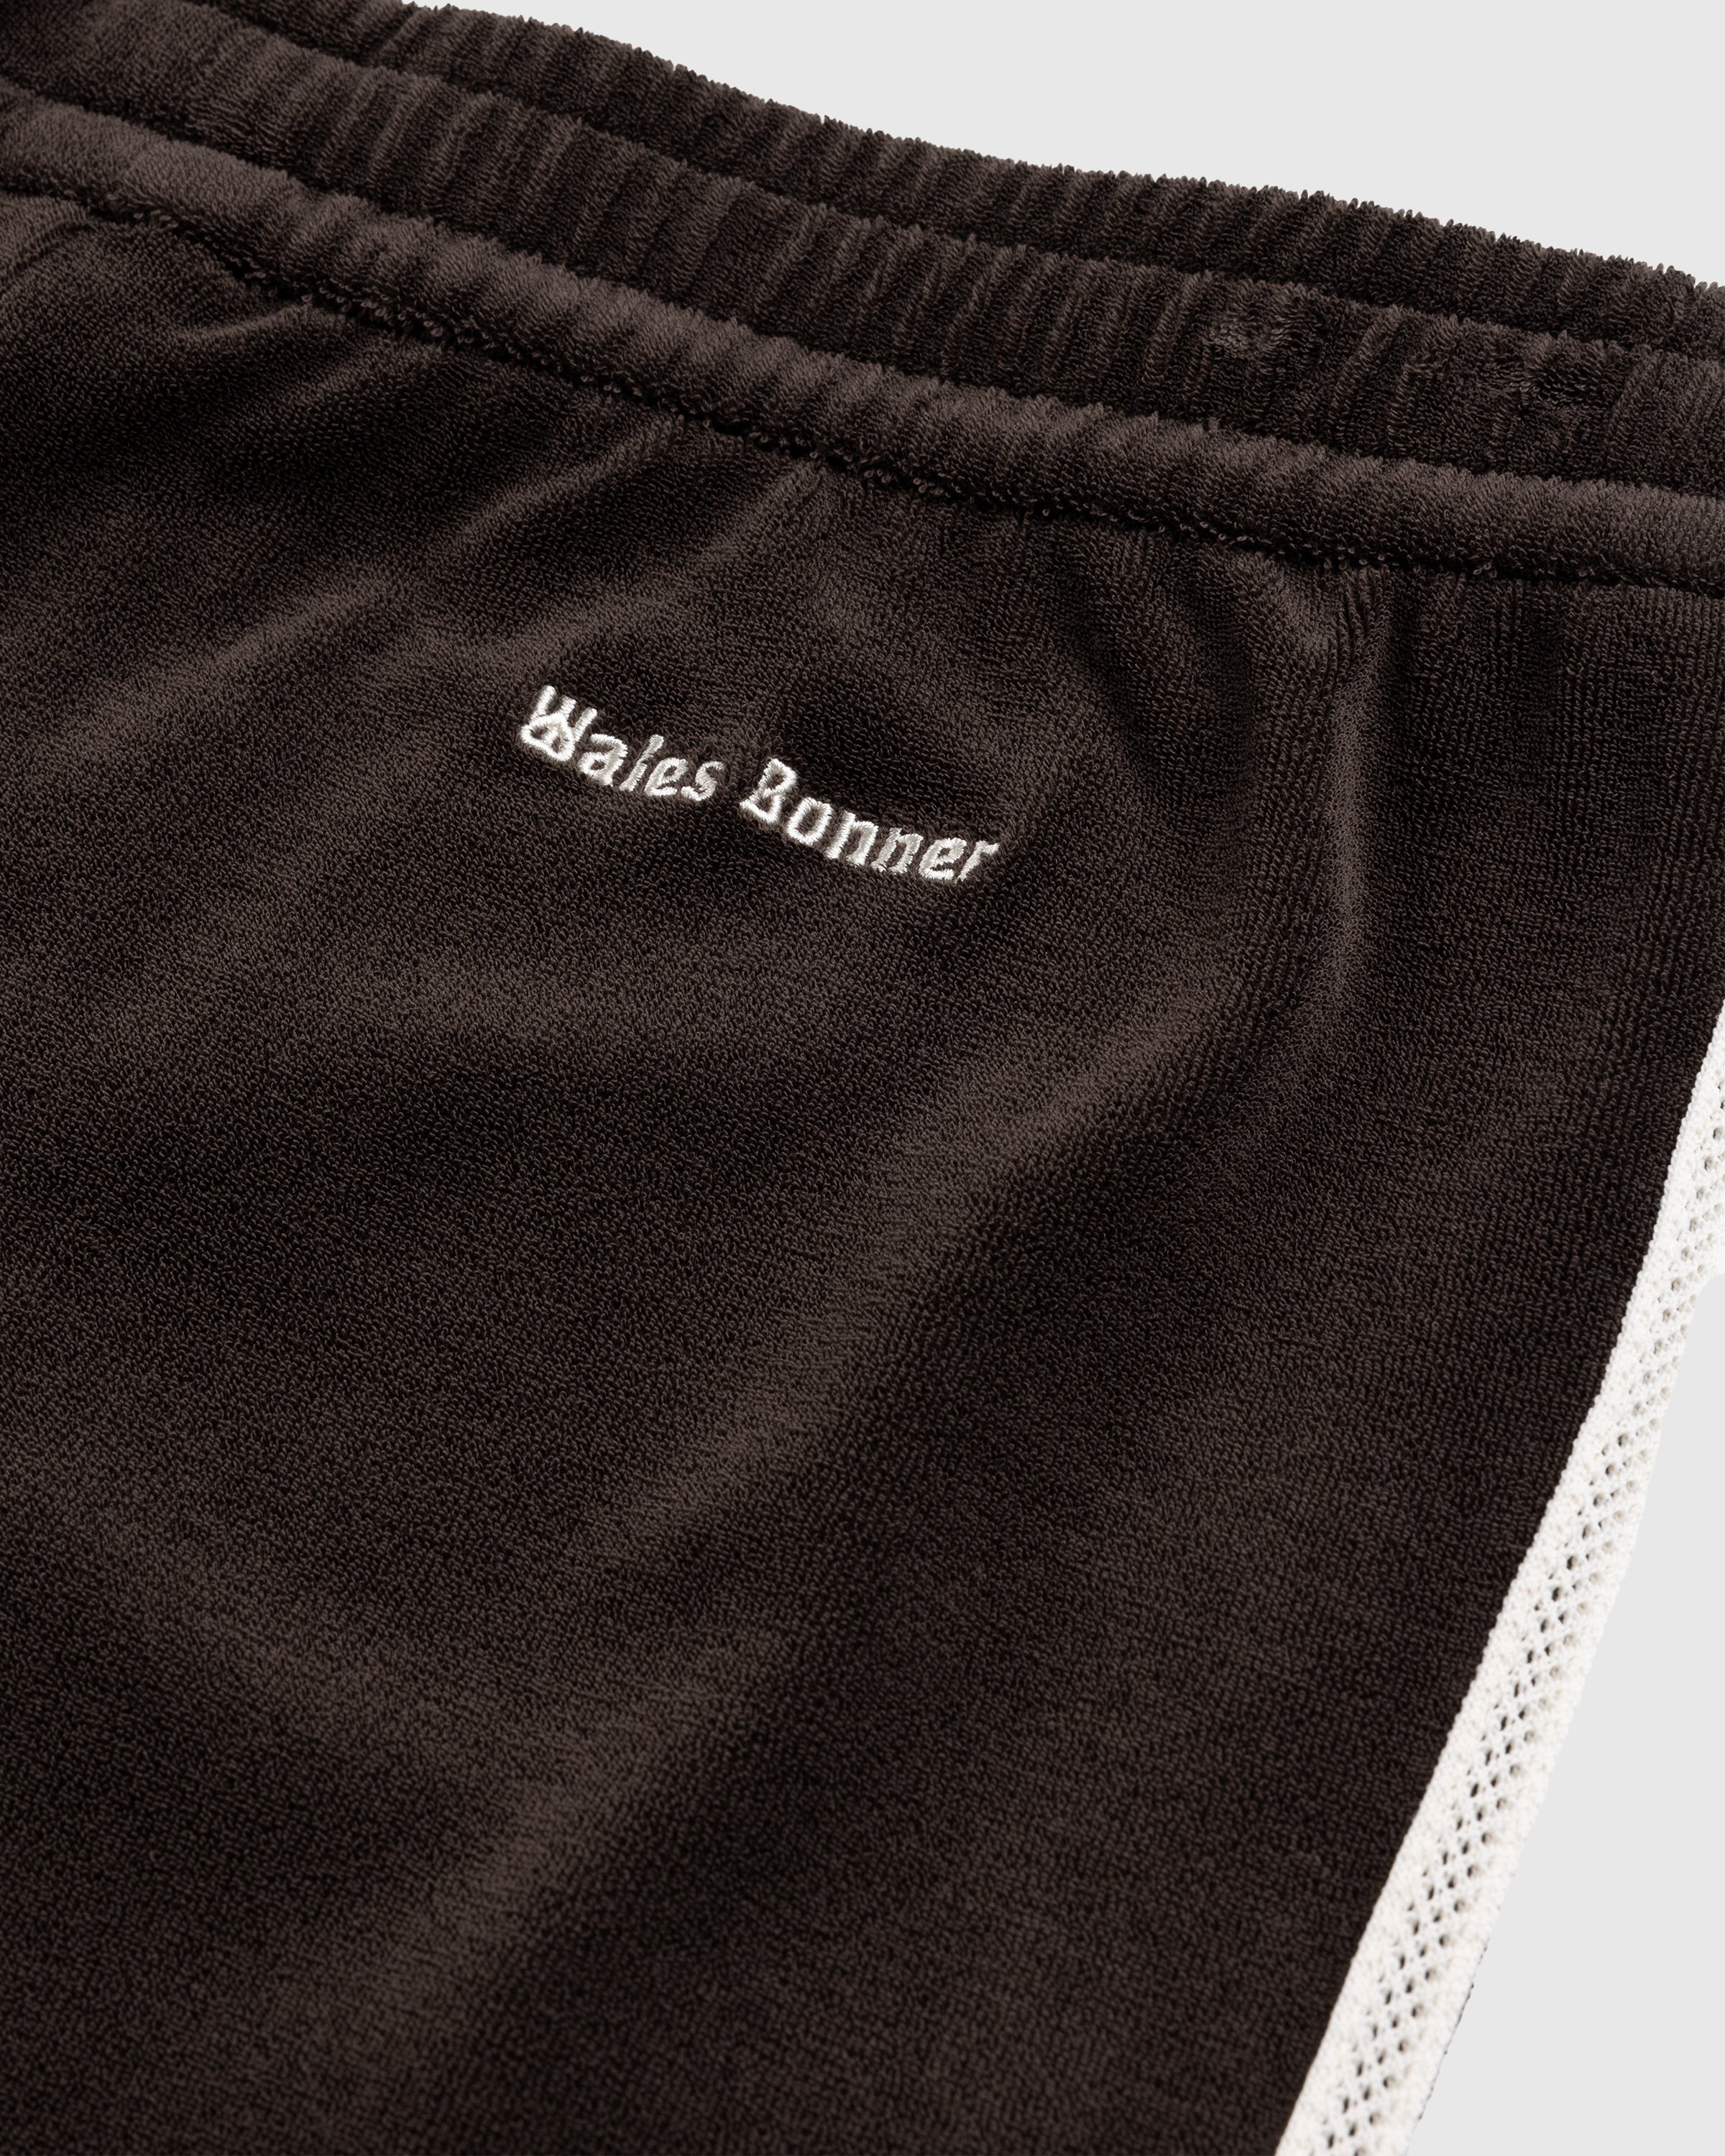 Adidas x Wales Bonner - Cotton Blend Shorts Dark Brown - Clothing - Brown - Image 5